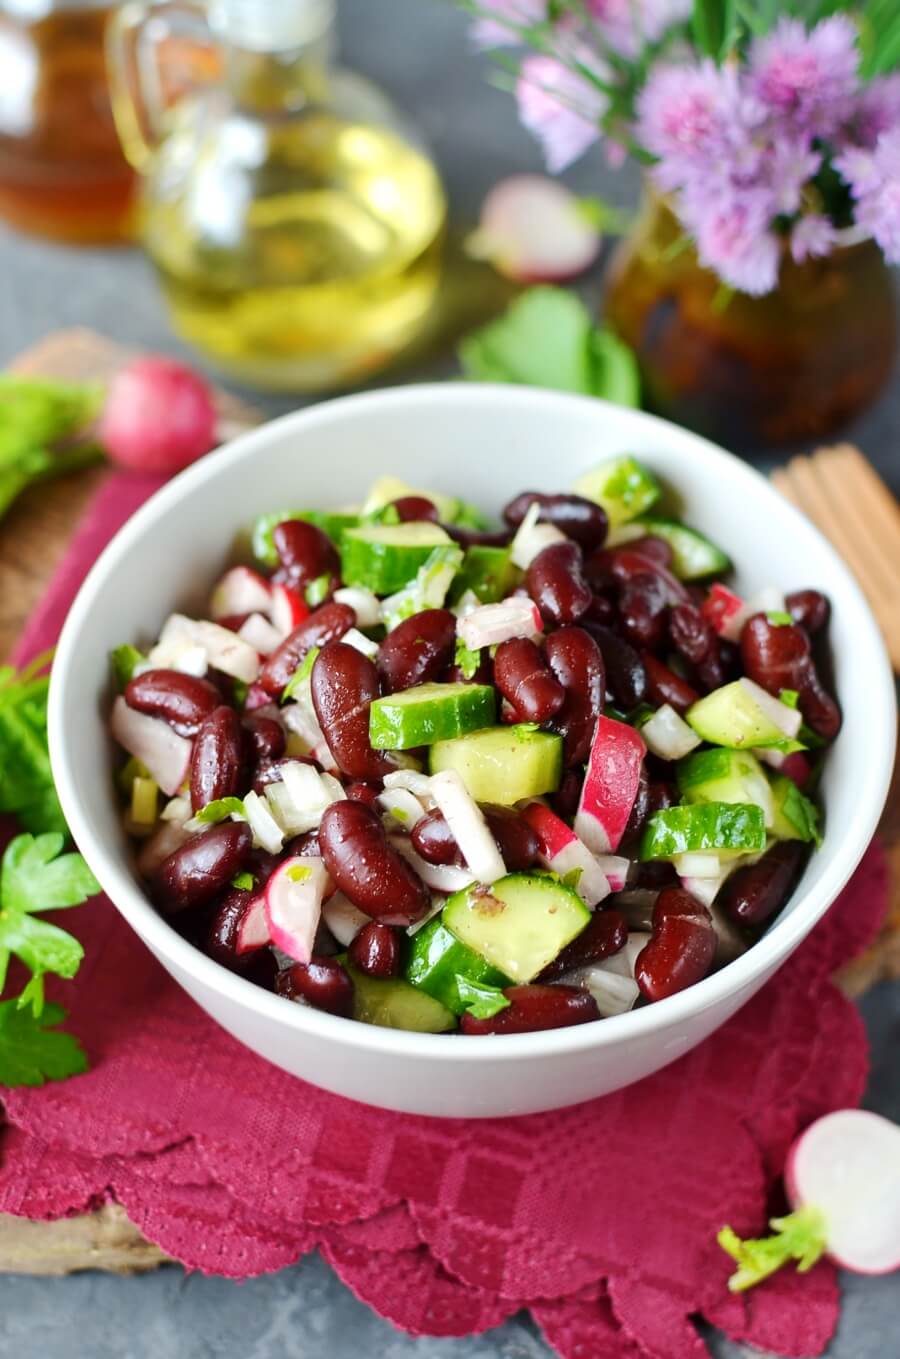 Vegan Kidney Bean Salad Recipe - Cook.me Recipes